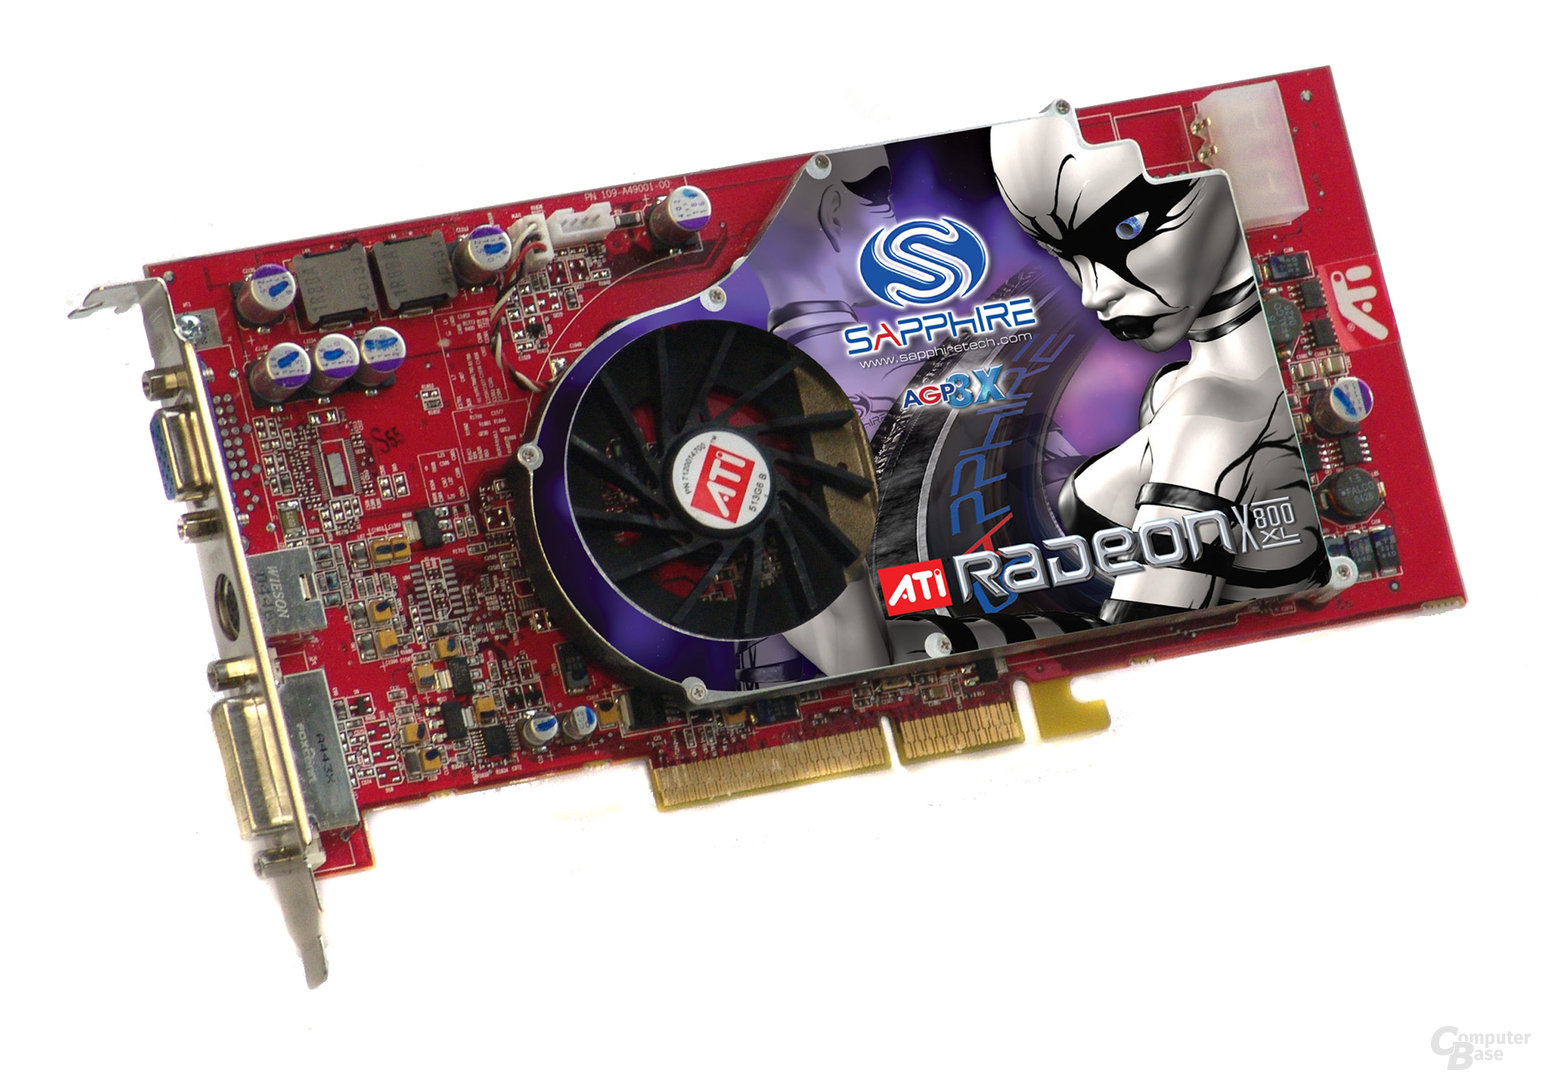 Sapphire Radeon X800 XL